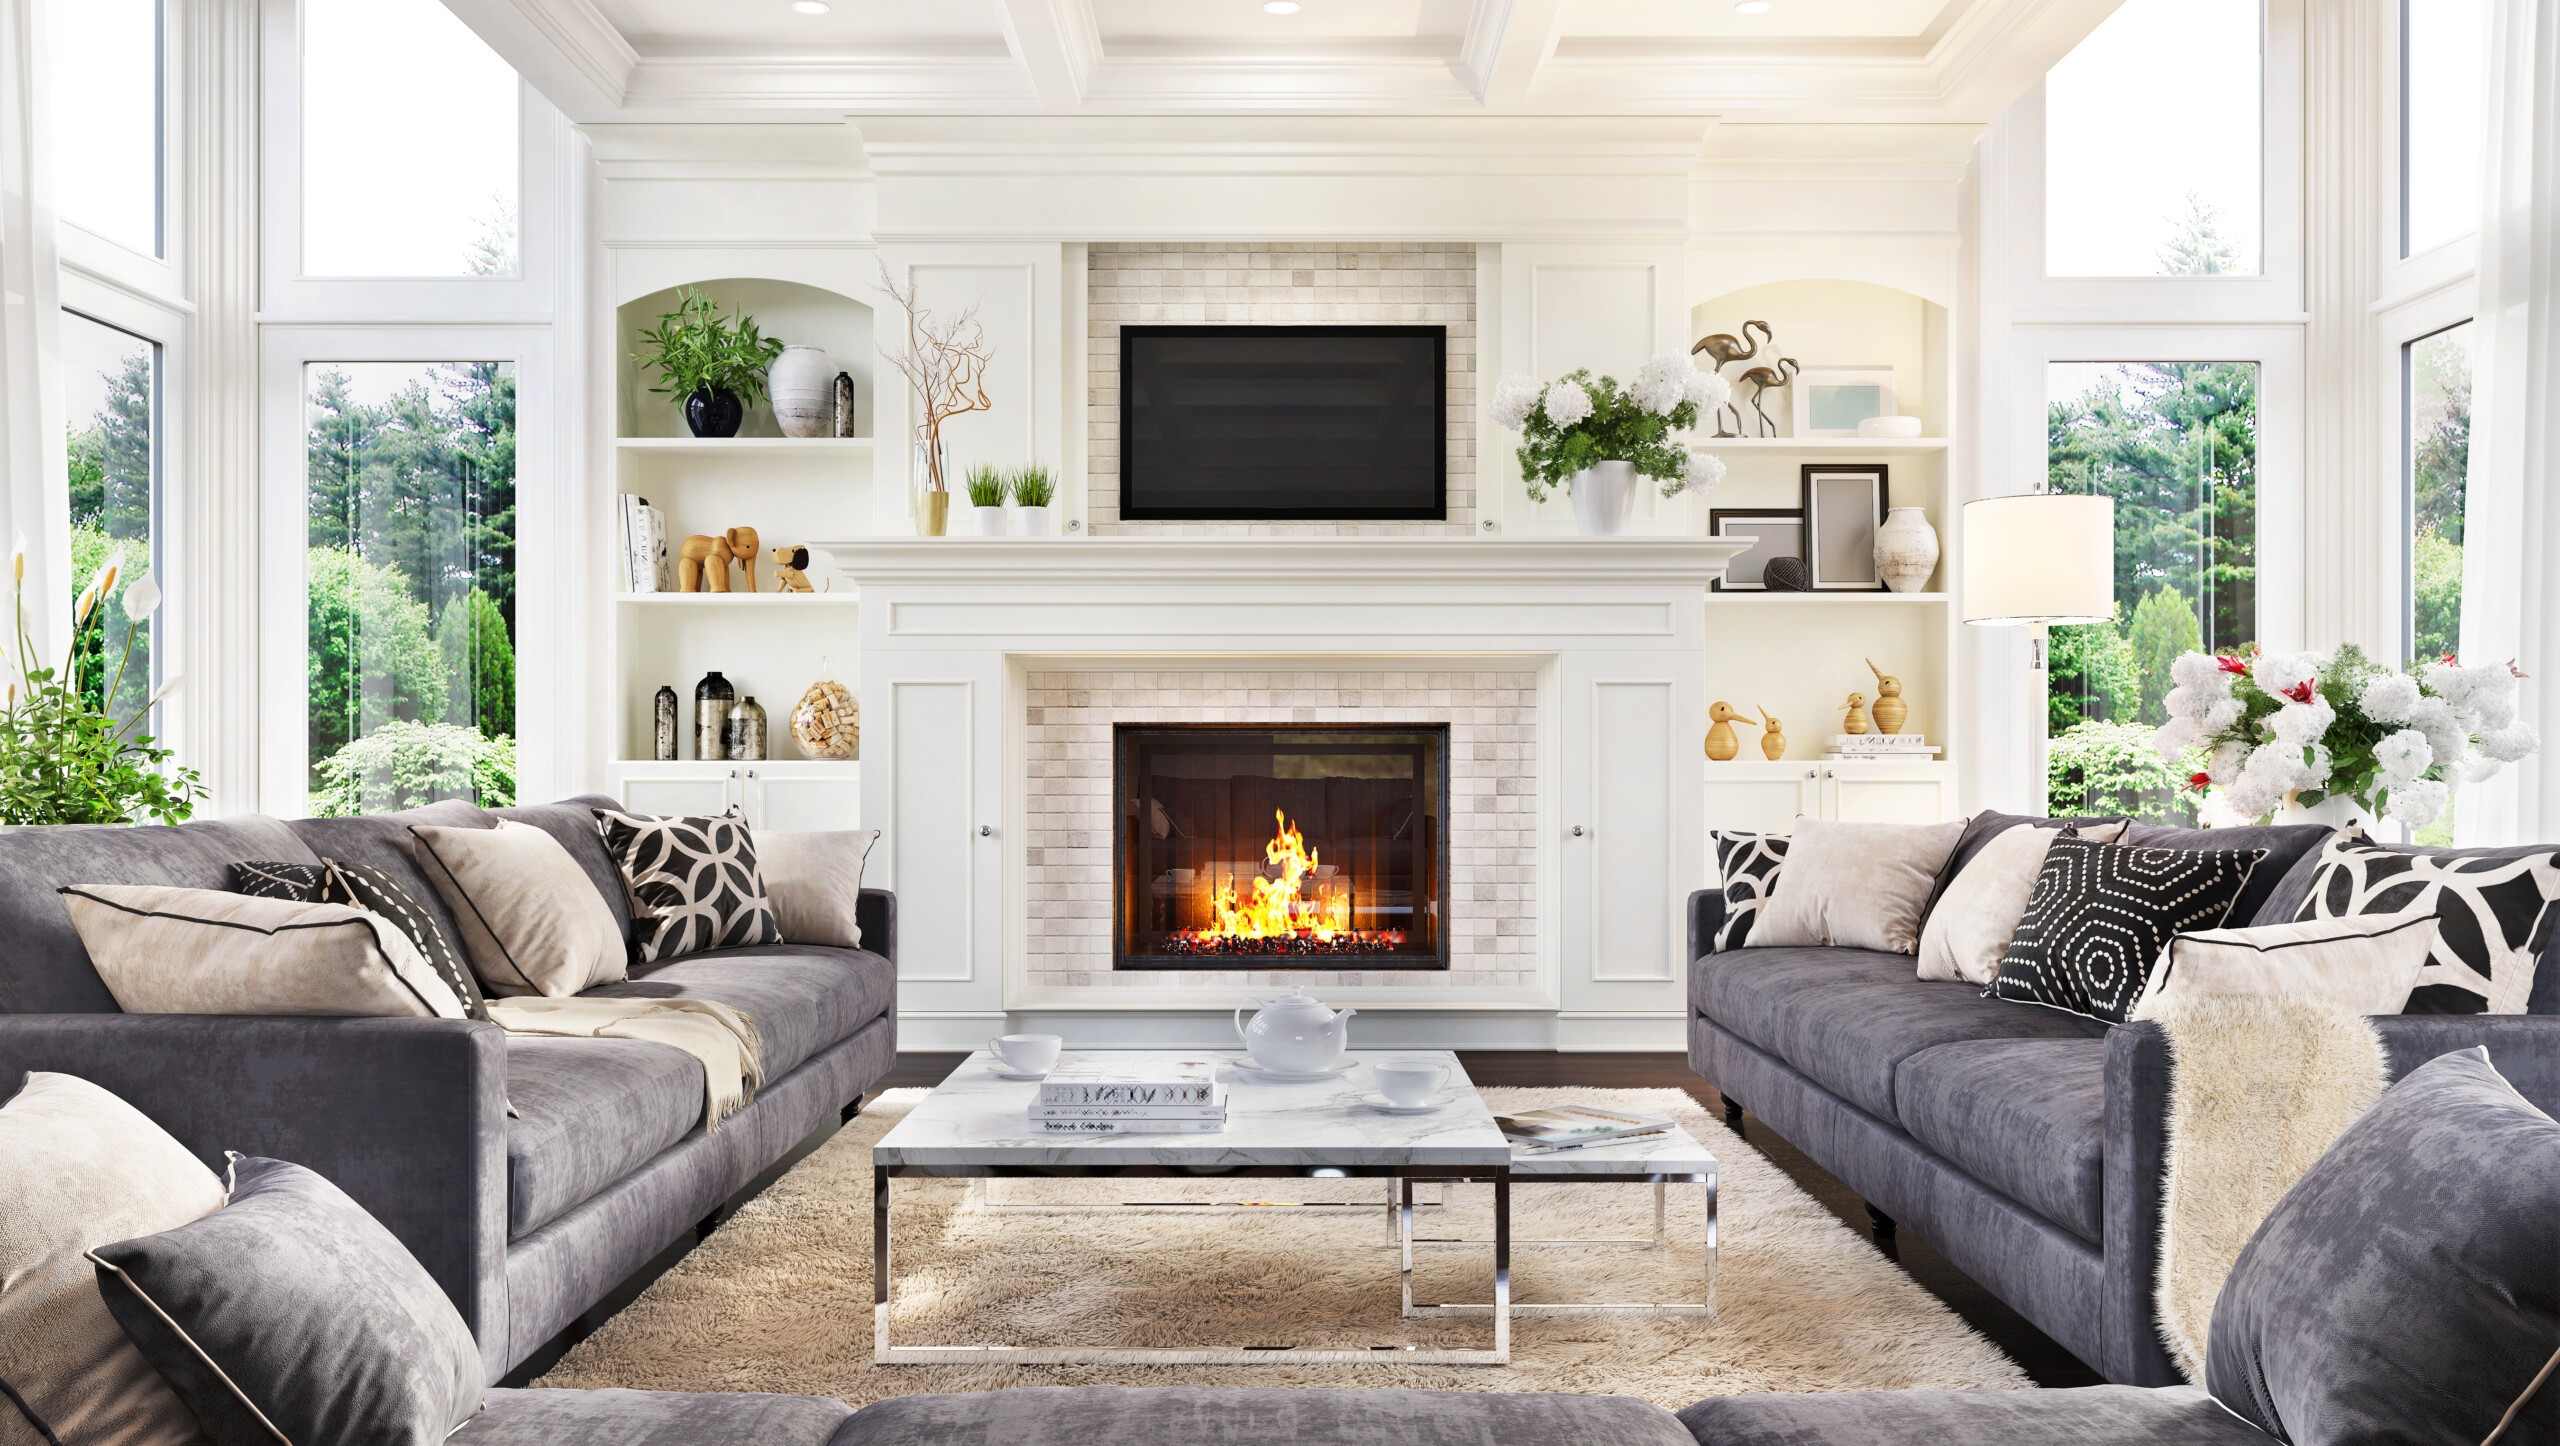 10 Classic Interior Design Styles Defined - Décor Aid